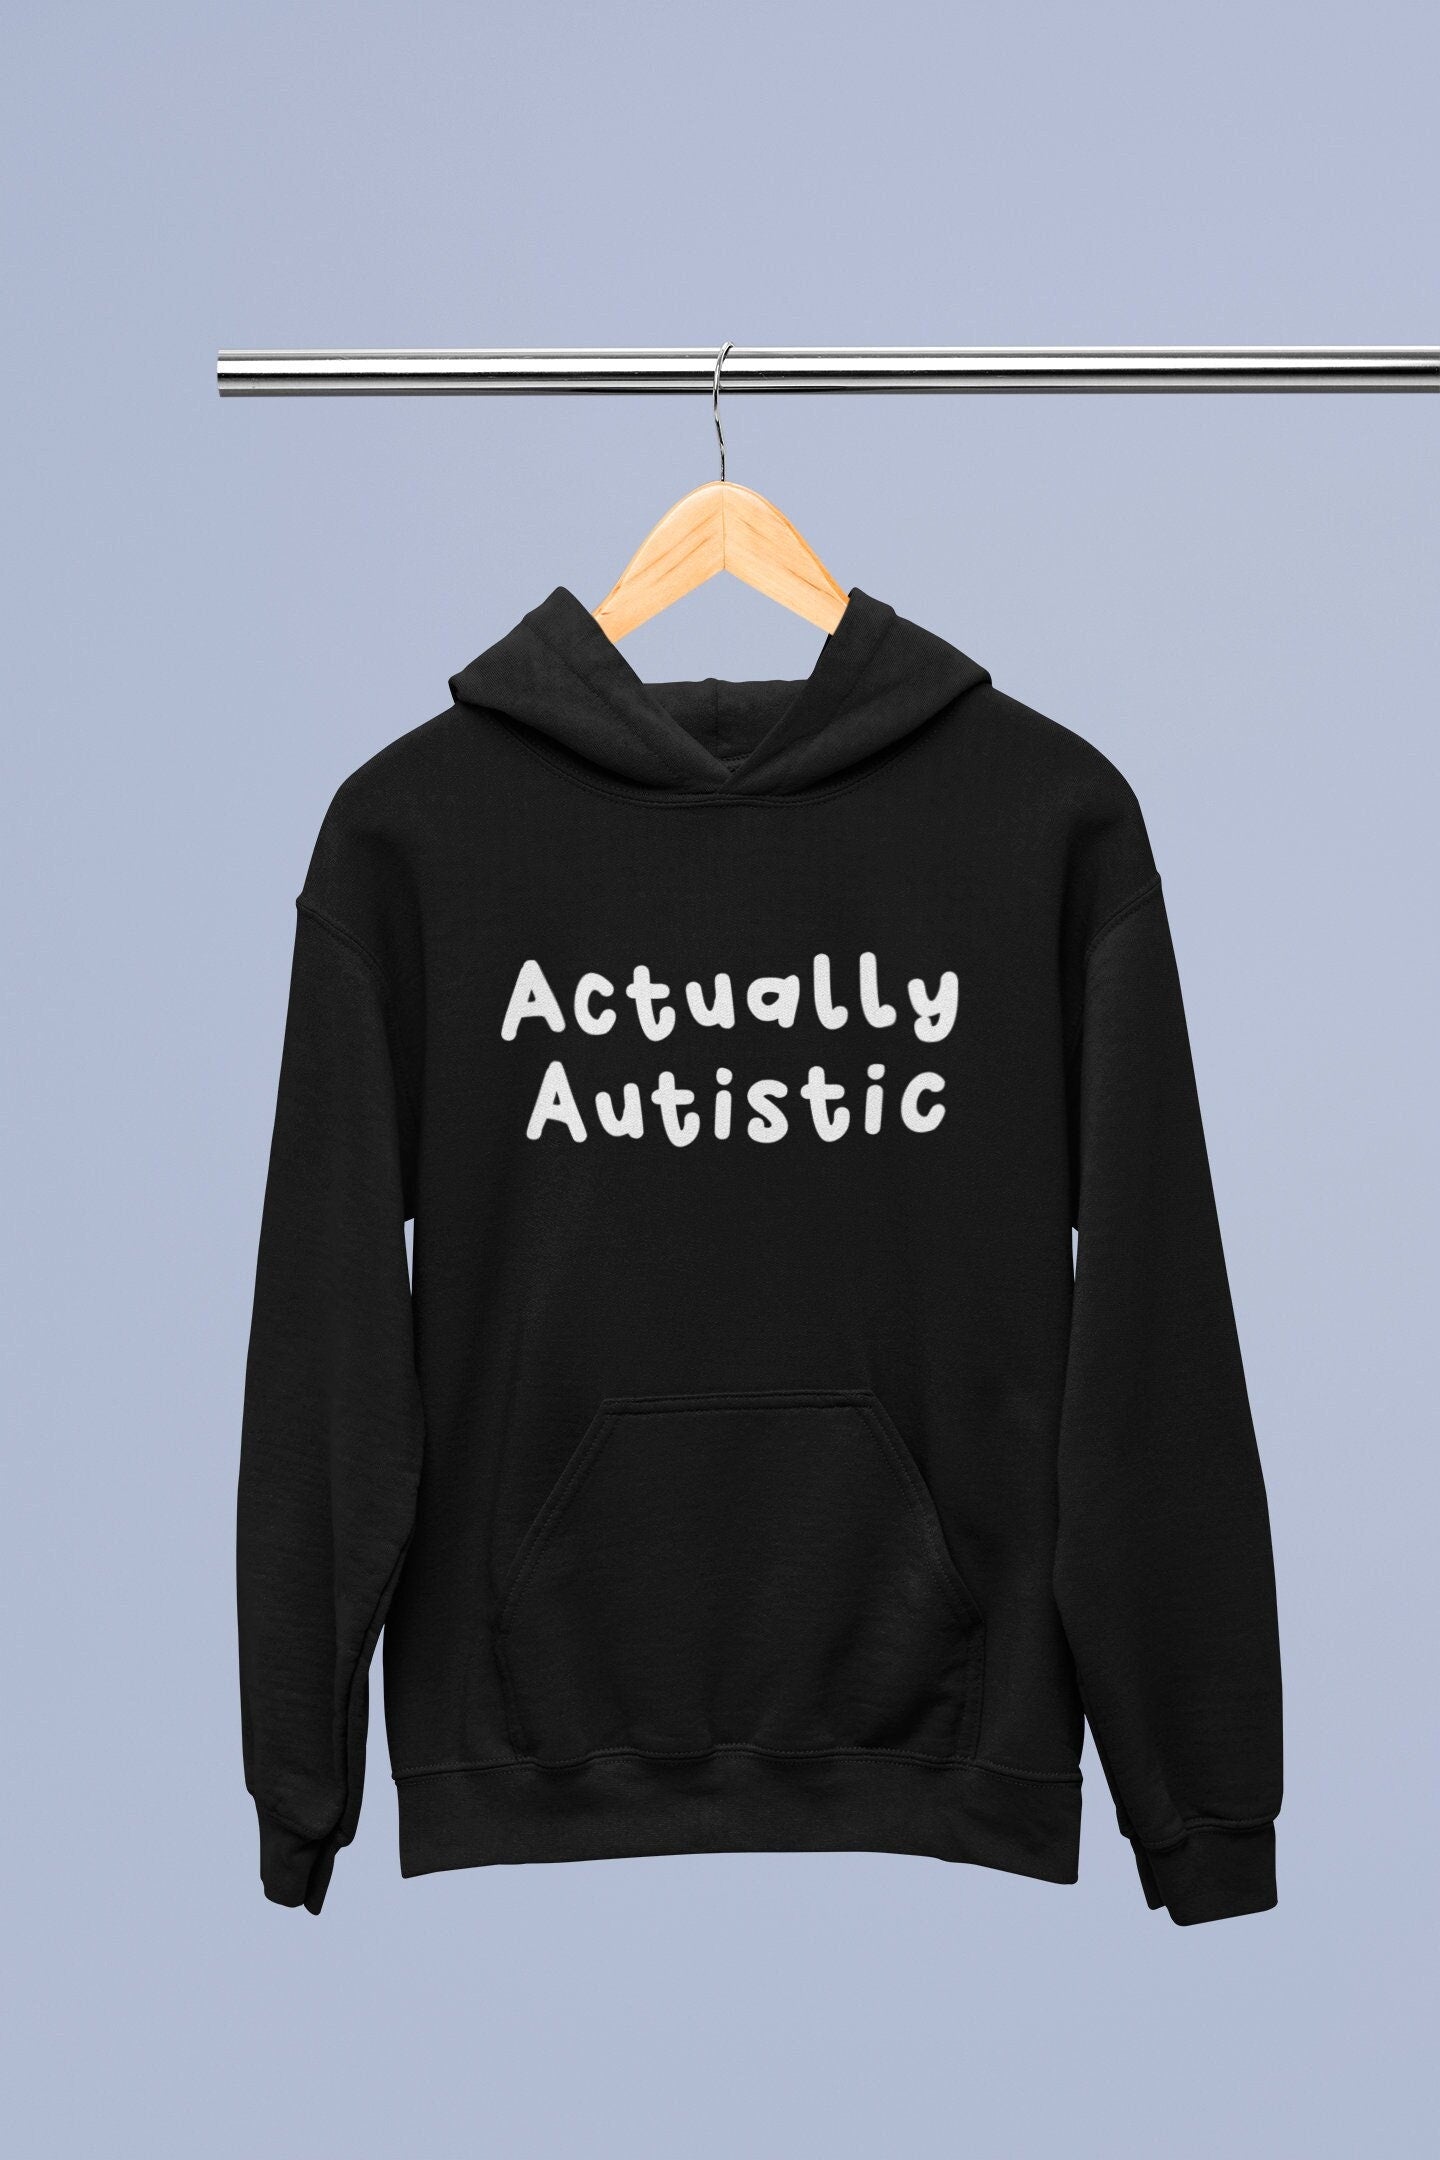 Actually Autistic Hoodie | Autism Awareness - Autism Gifts - Neurodiverse - Neurodiversity